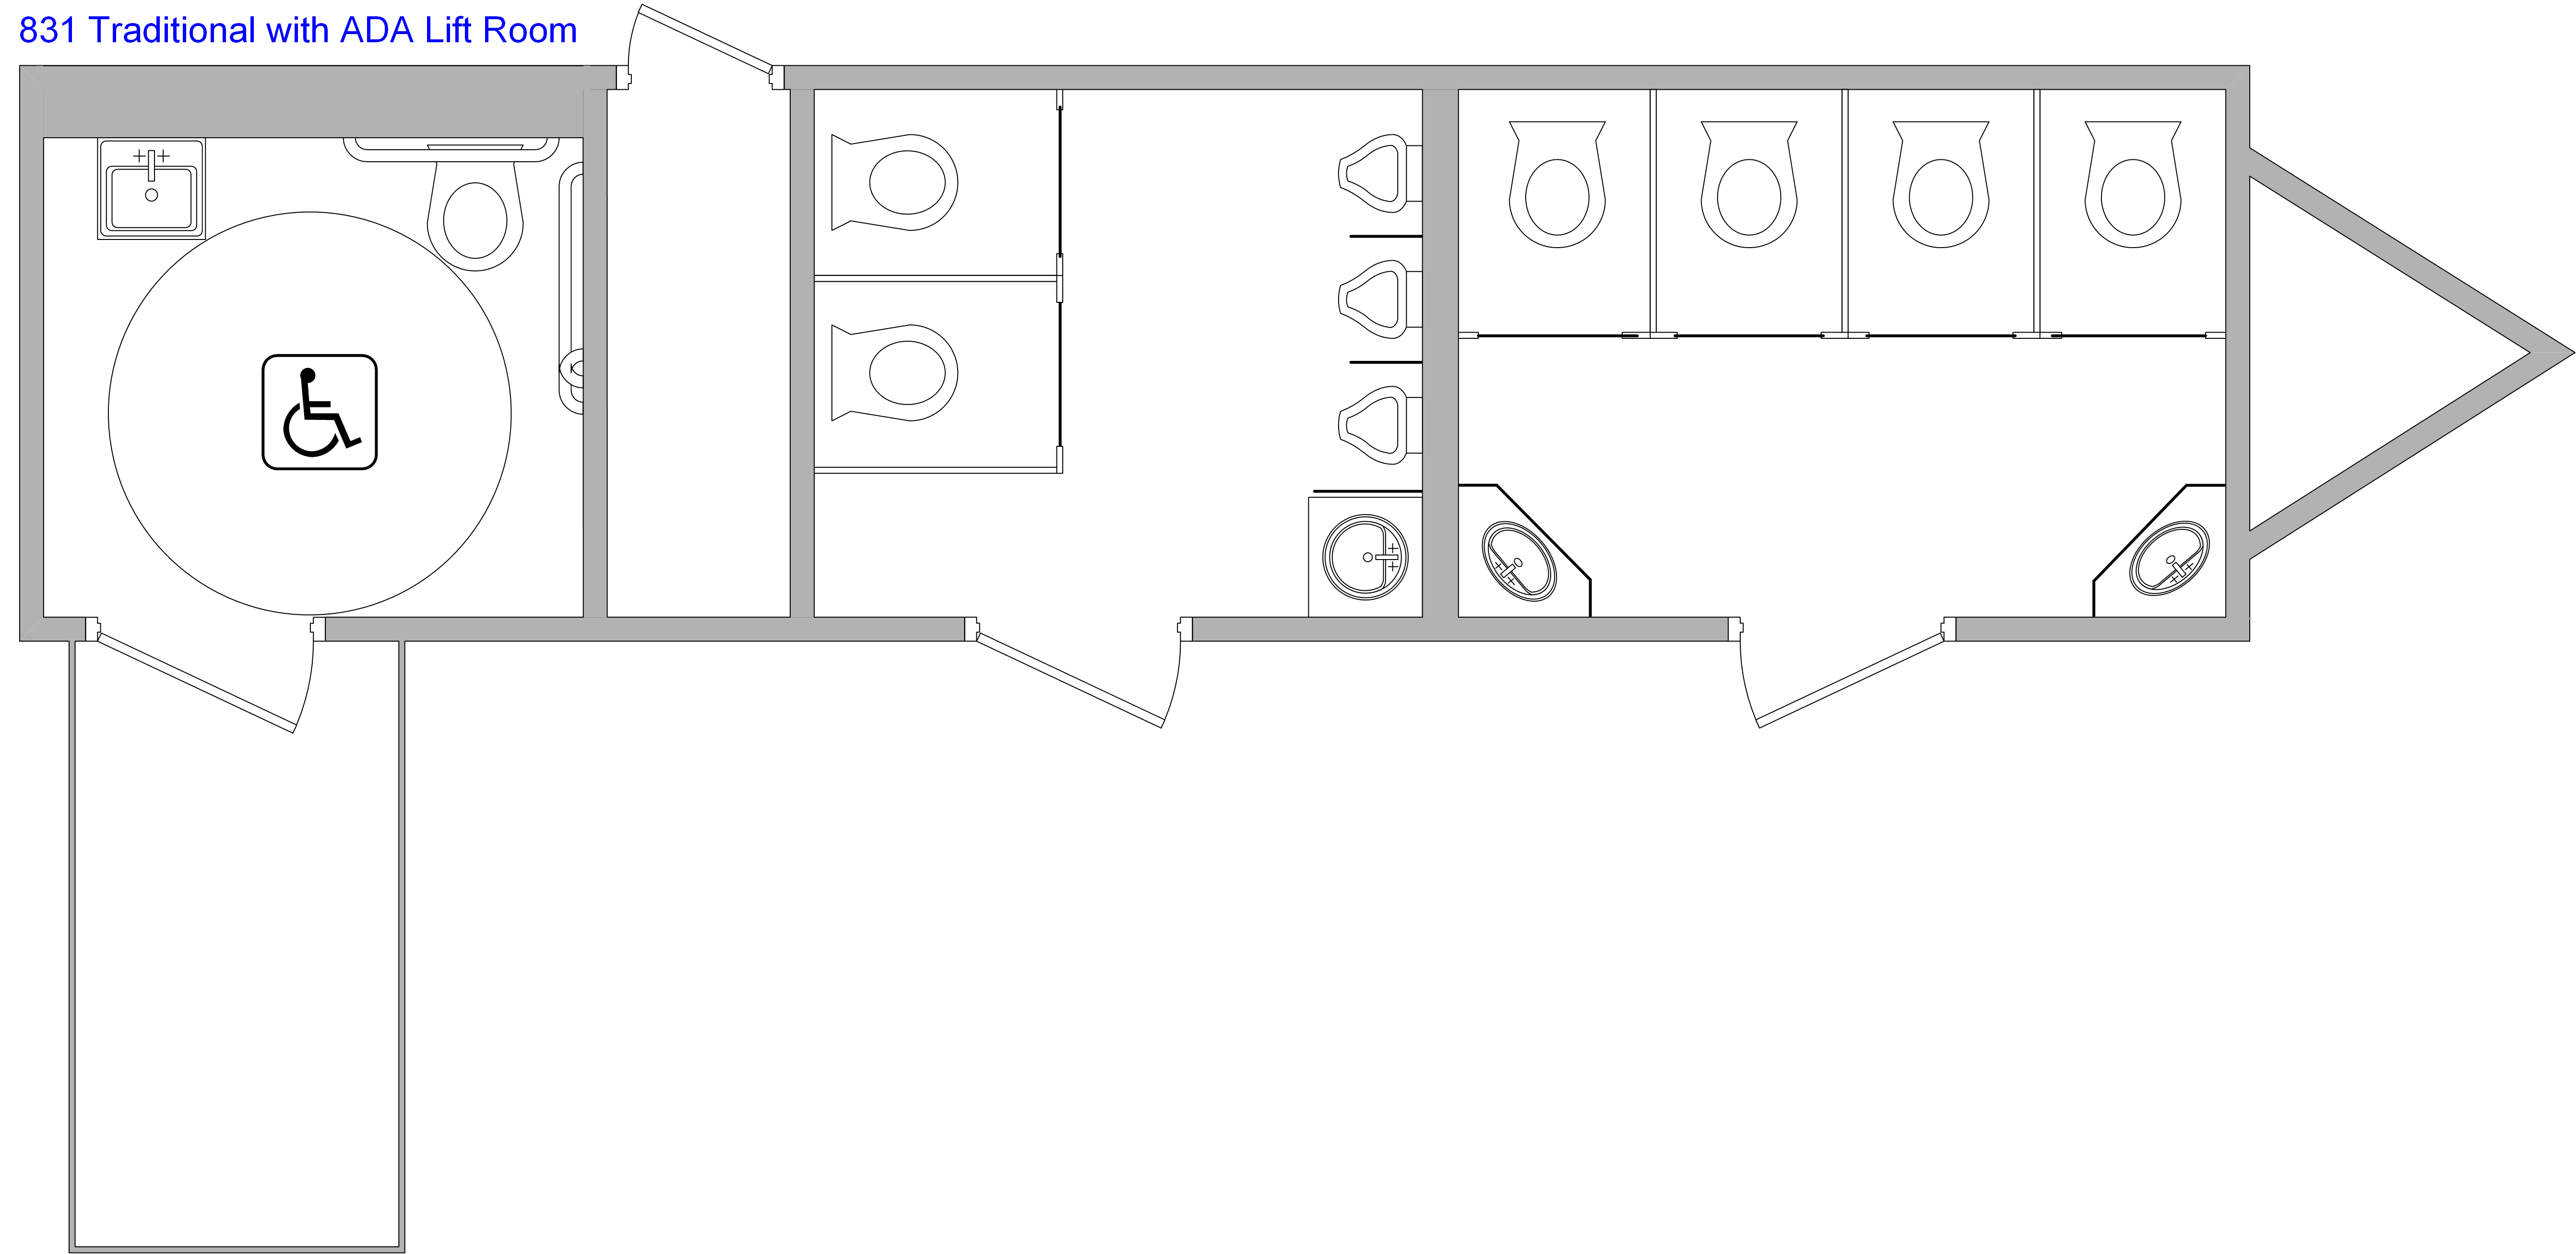 831 Traditional ADA Lift Room